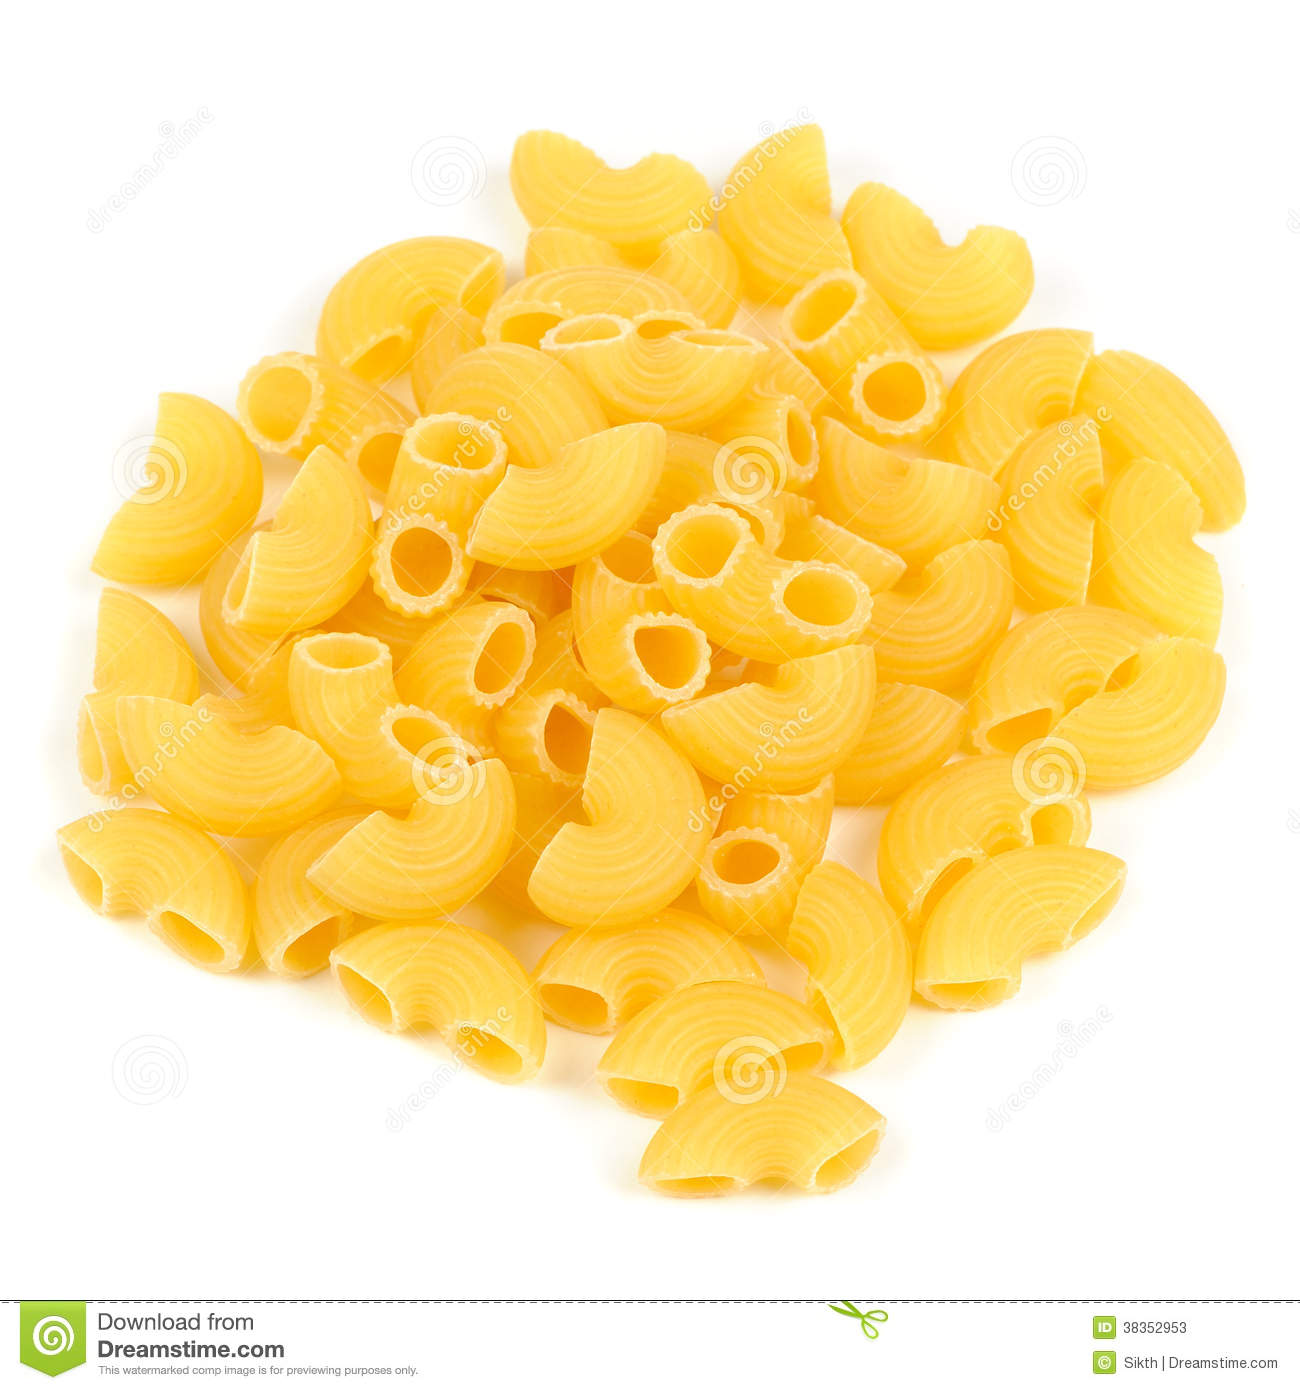 Raw Elbow Macaroni  Gomiti Pasta  Isolated On White Background Stock    